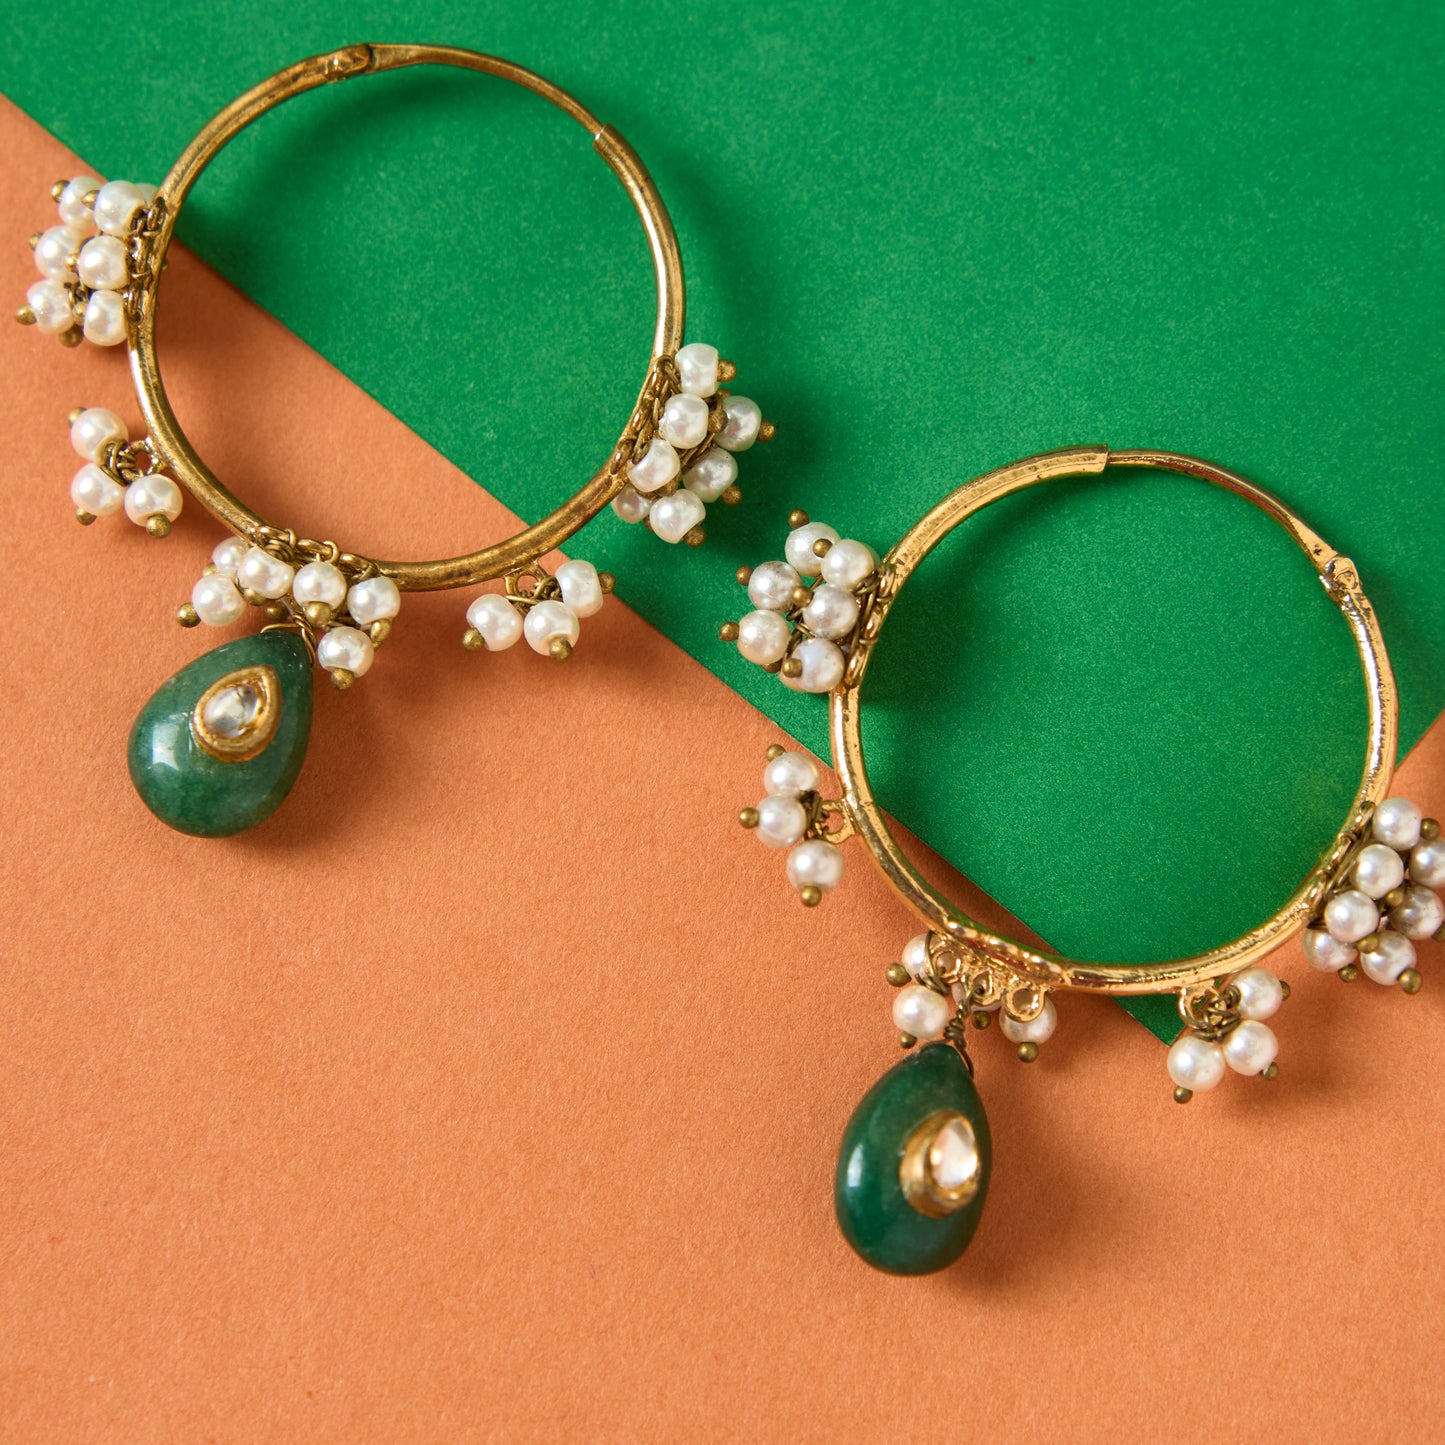 Moonstruck Traditional Hoop Earrings With Pearls for Women (Green) - www.MoonstruckINC.com